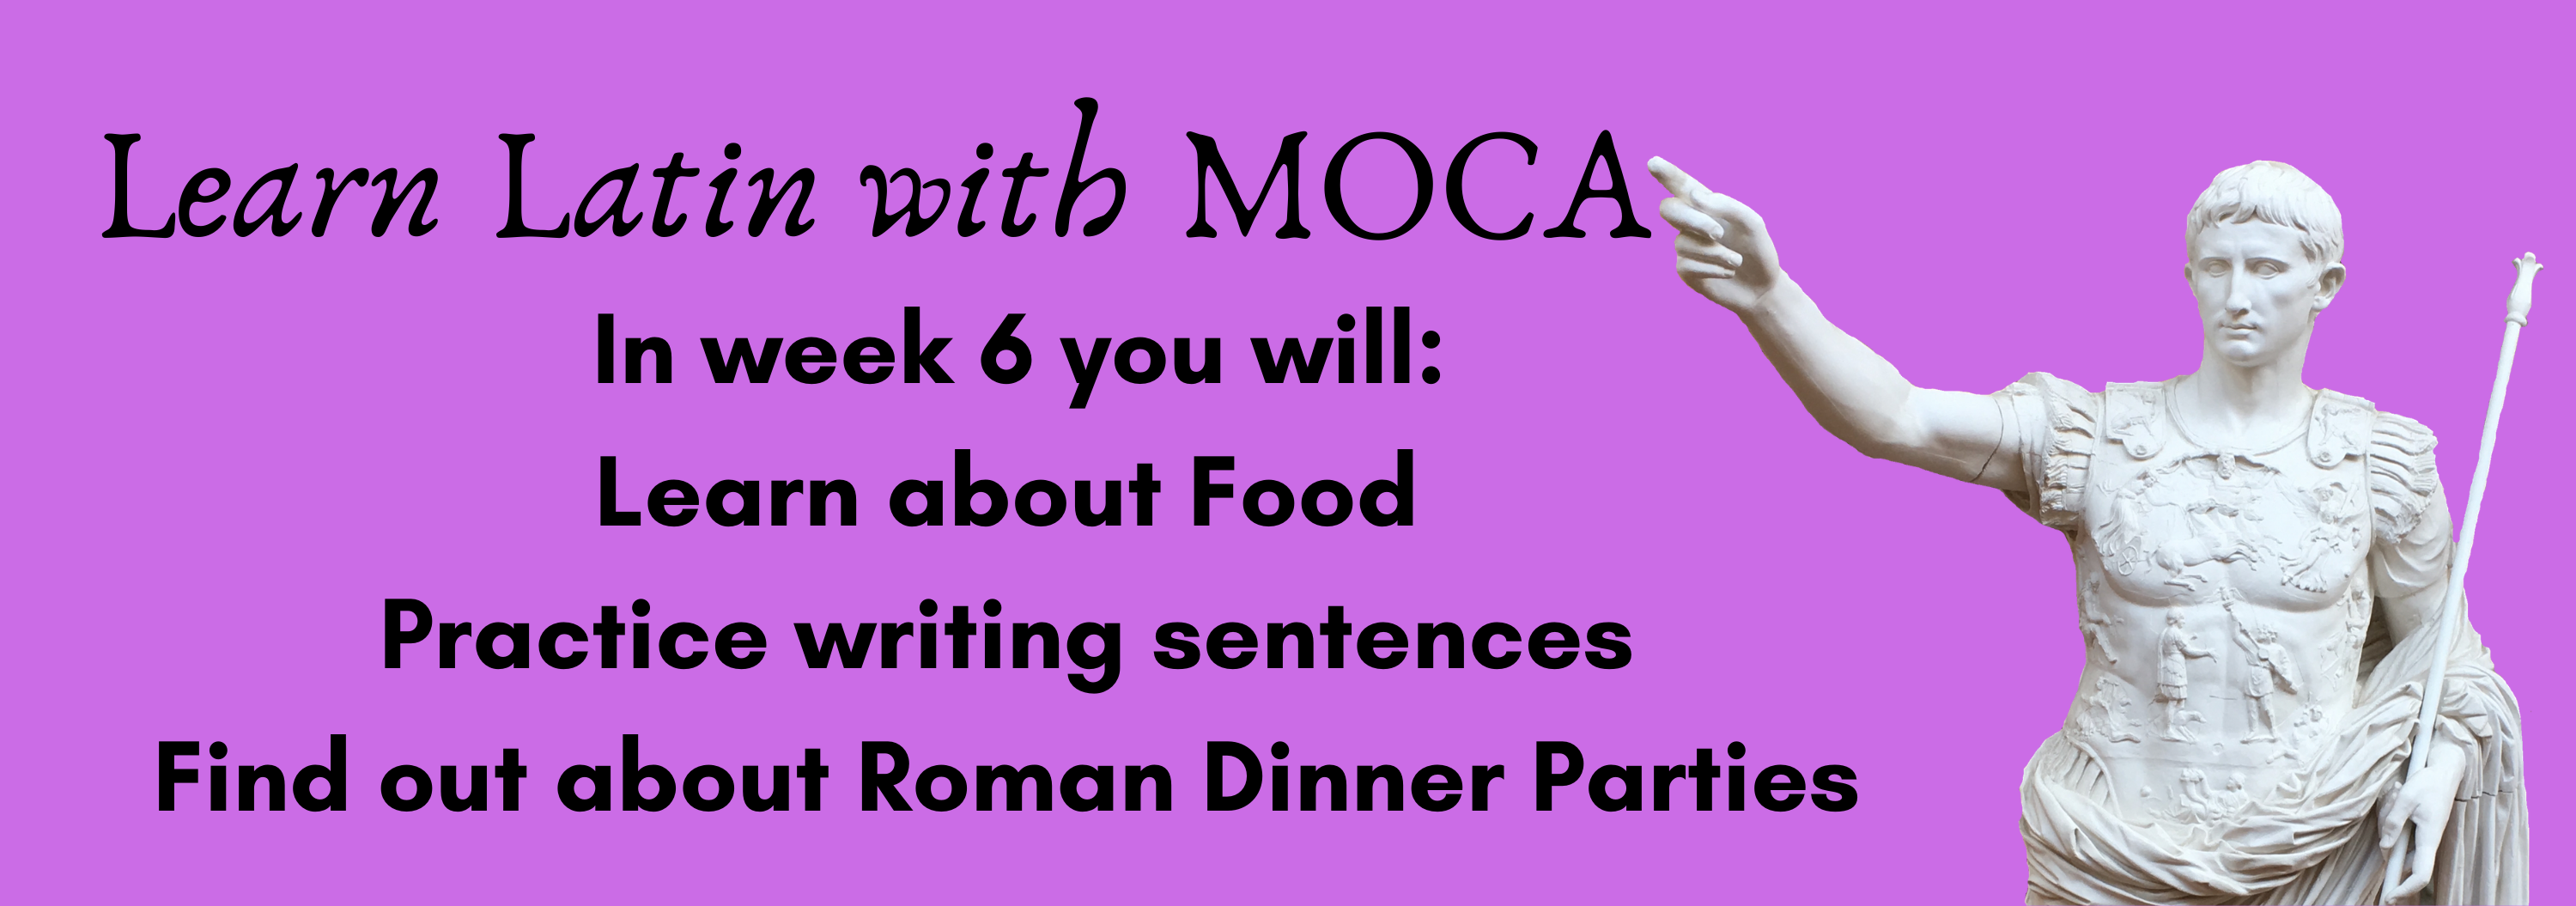  Learn Latin with Moca